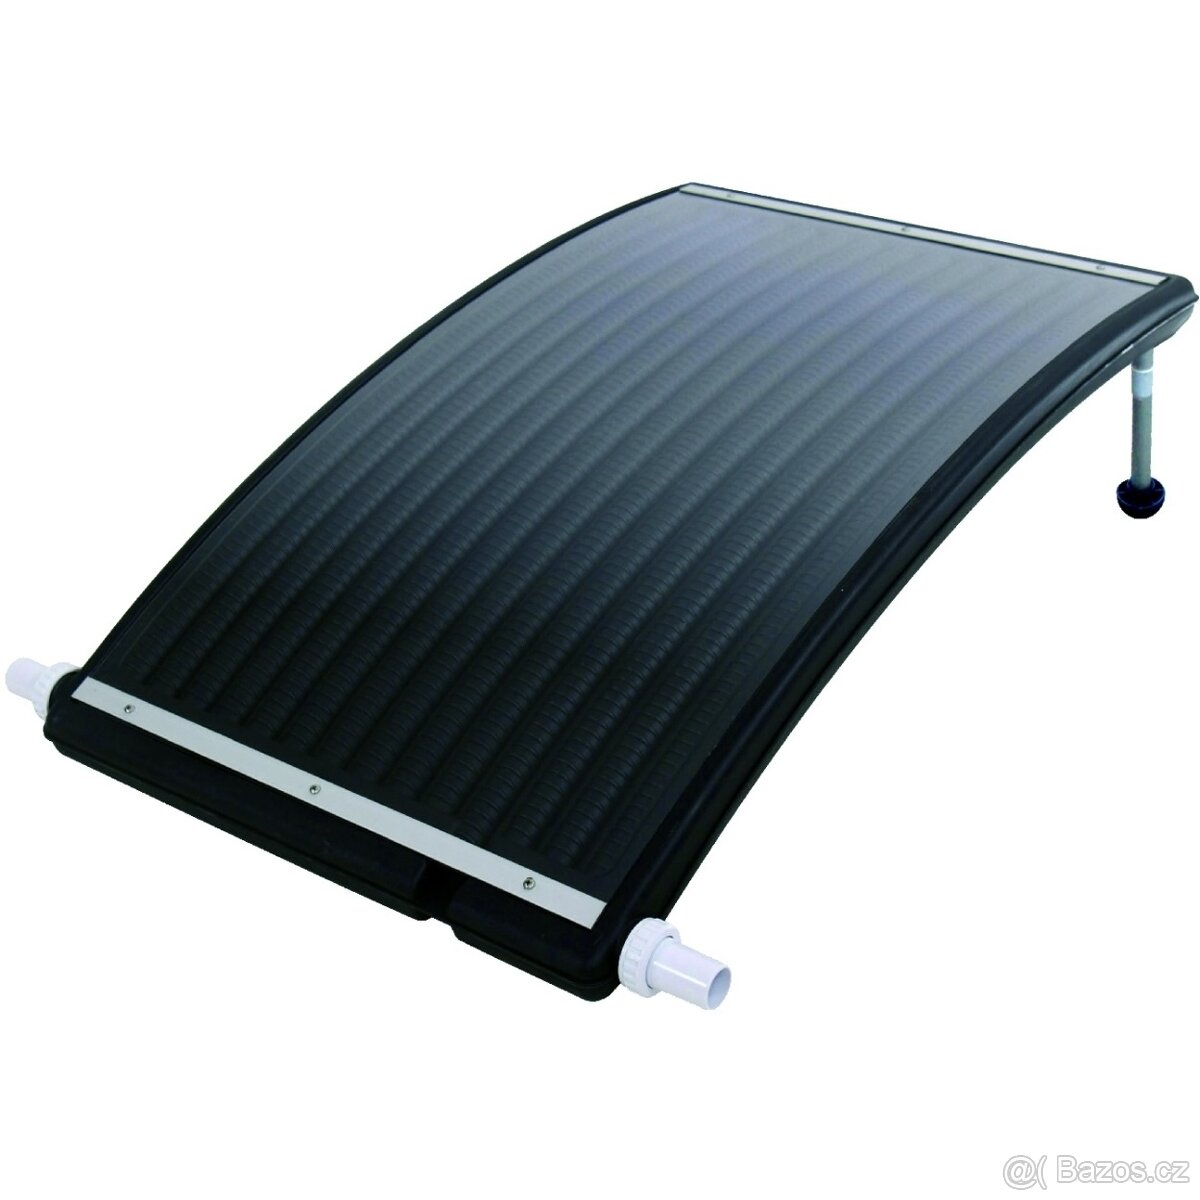 Solární ohřev 2 ks Marimex Slim 3000